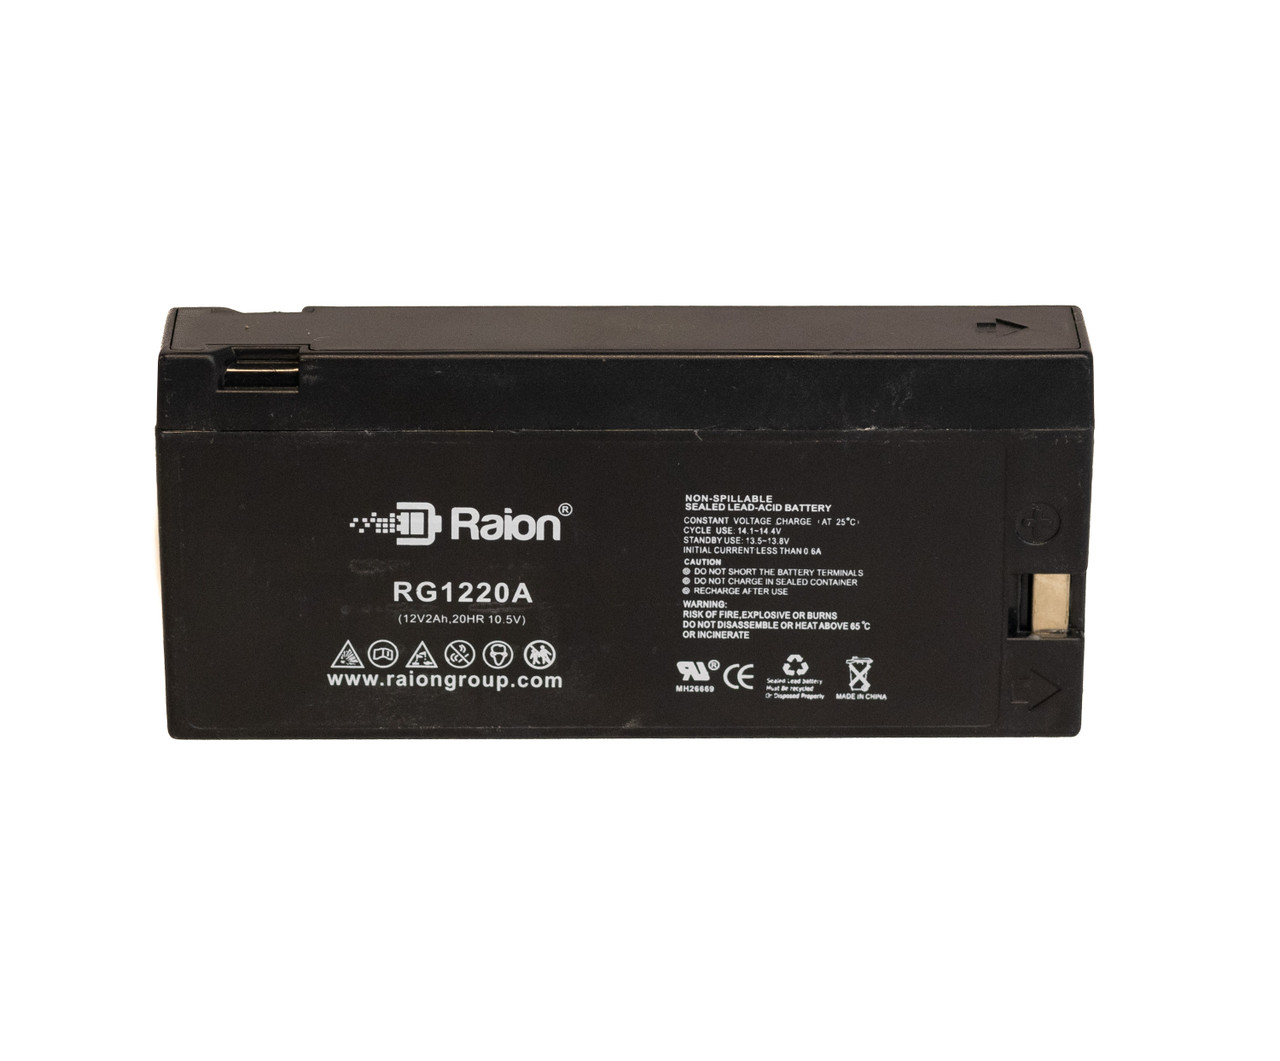 Raion Power RG1220A SLA Battery for Magnavox CVK-310